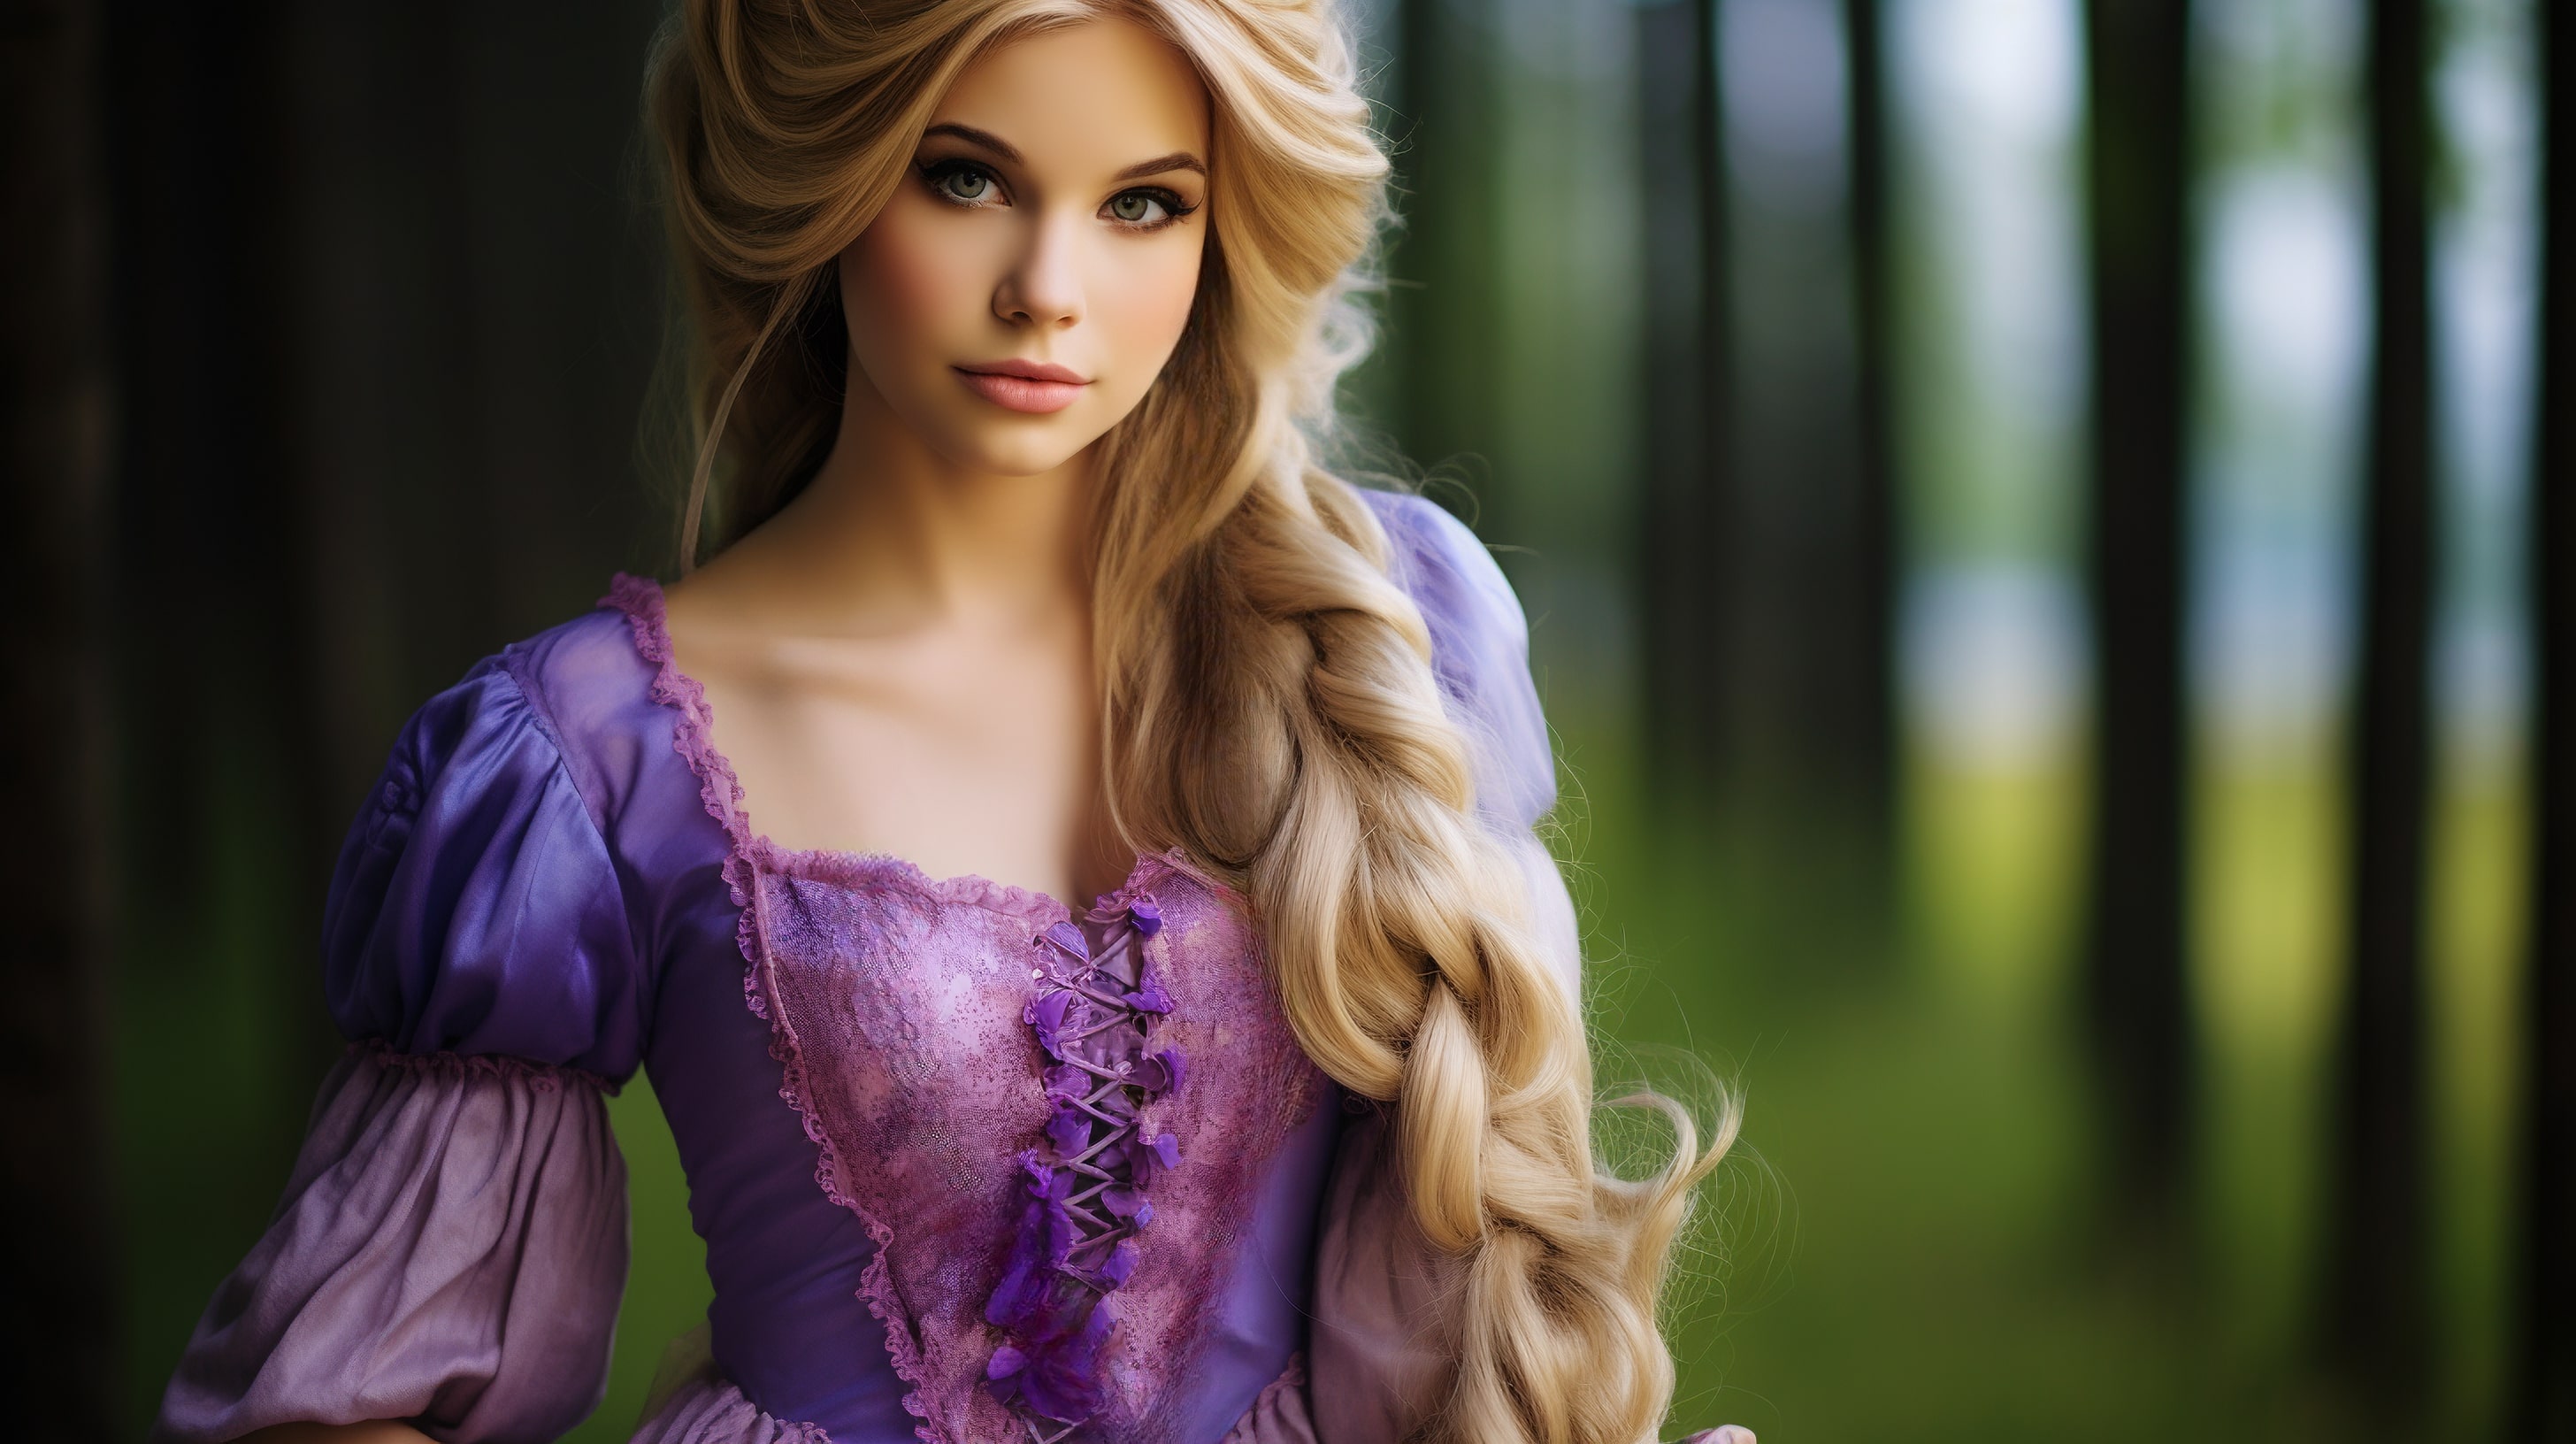 Girl in a beautiful purple dress with a long big braid